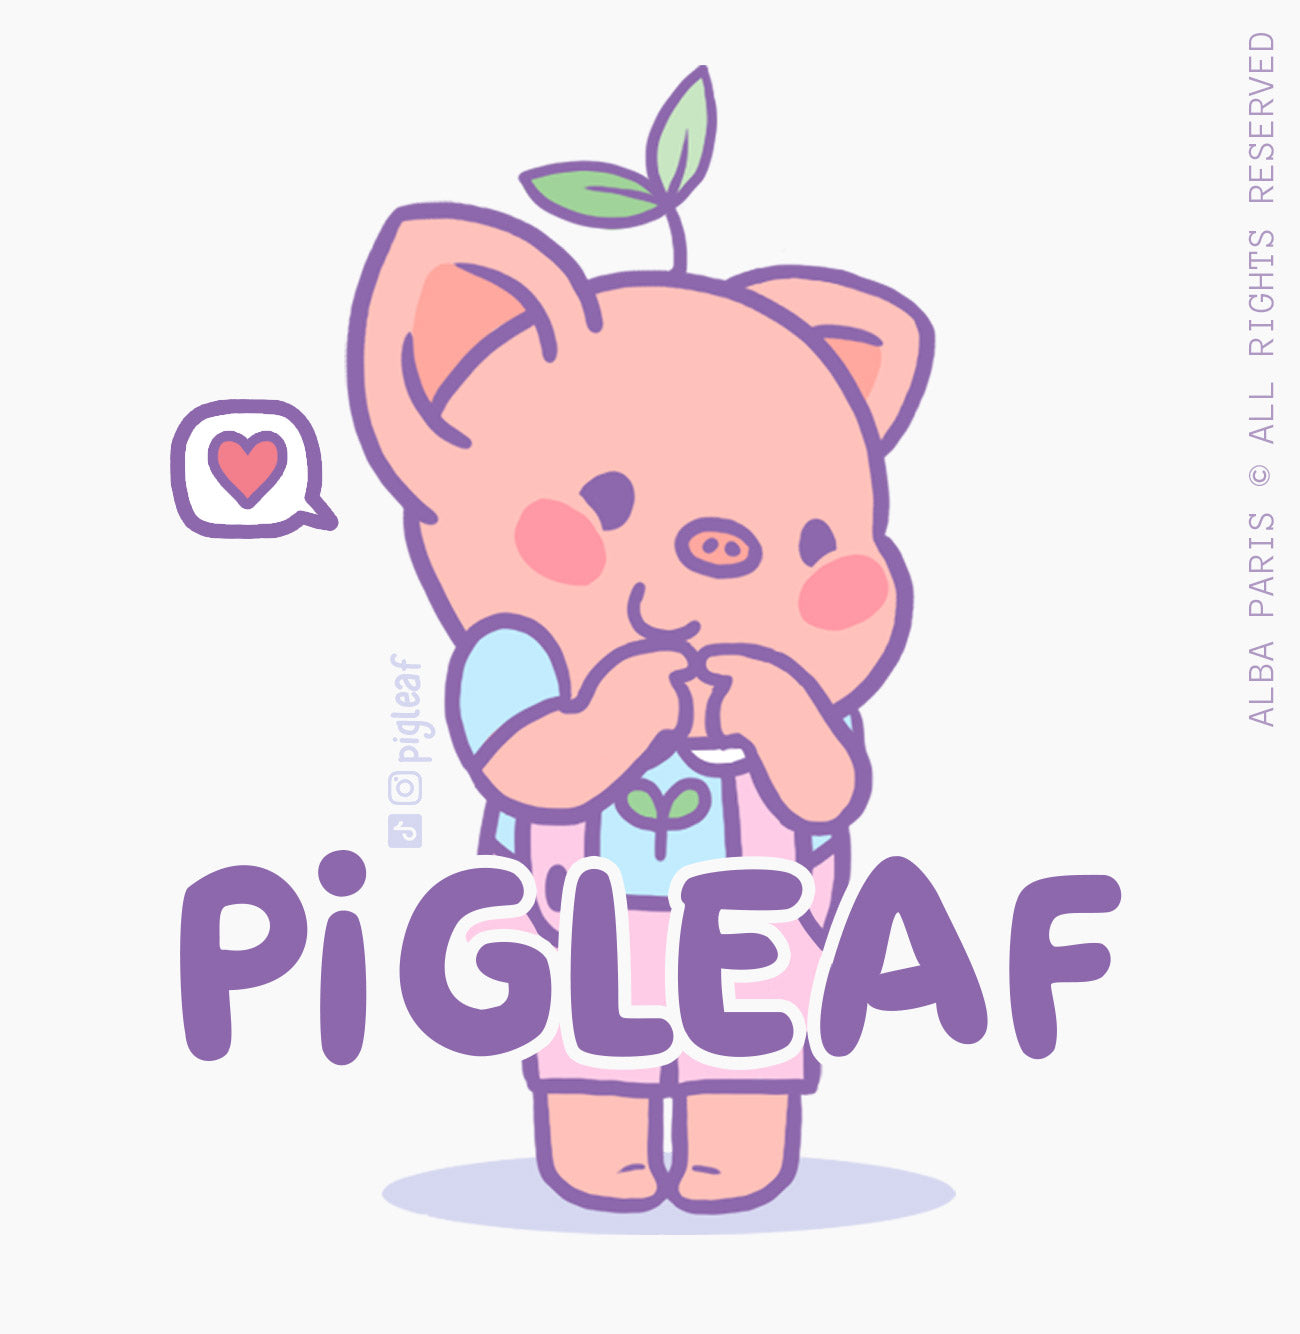 Pigleaf Title - Alba Paris - All Rights Reserved - Cute Pig